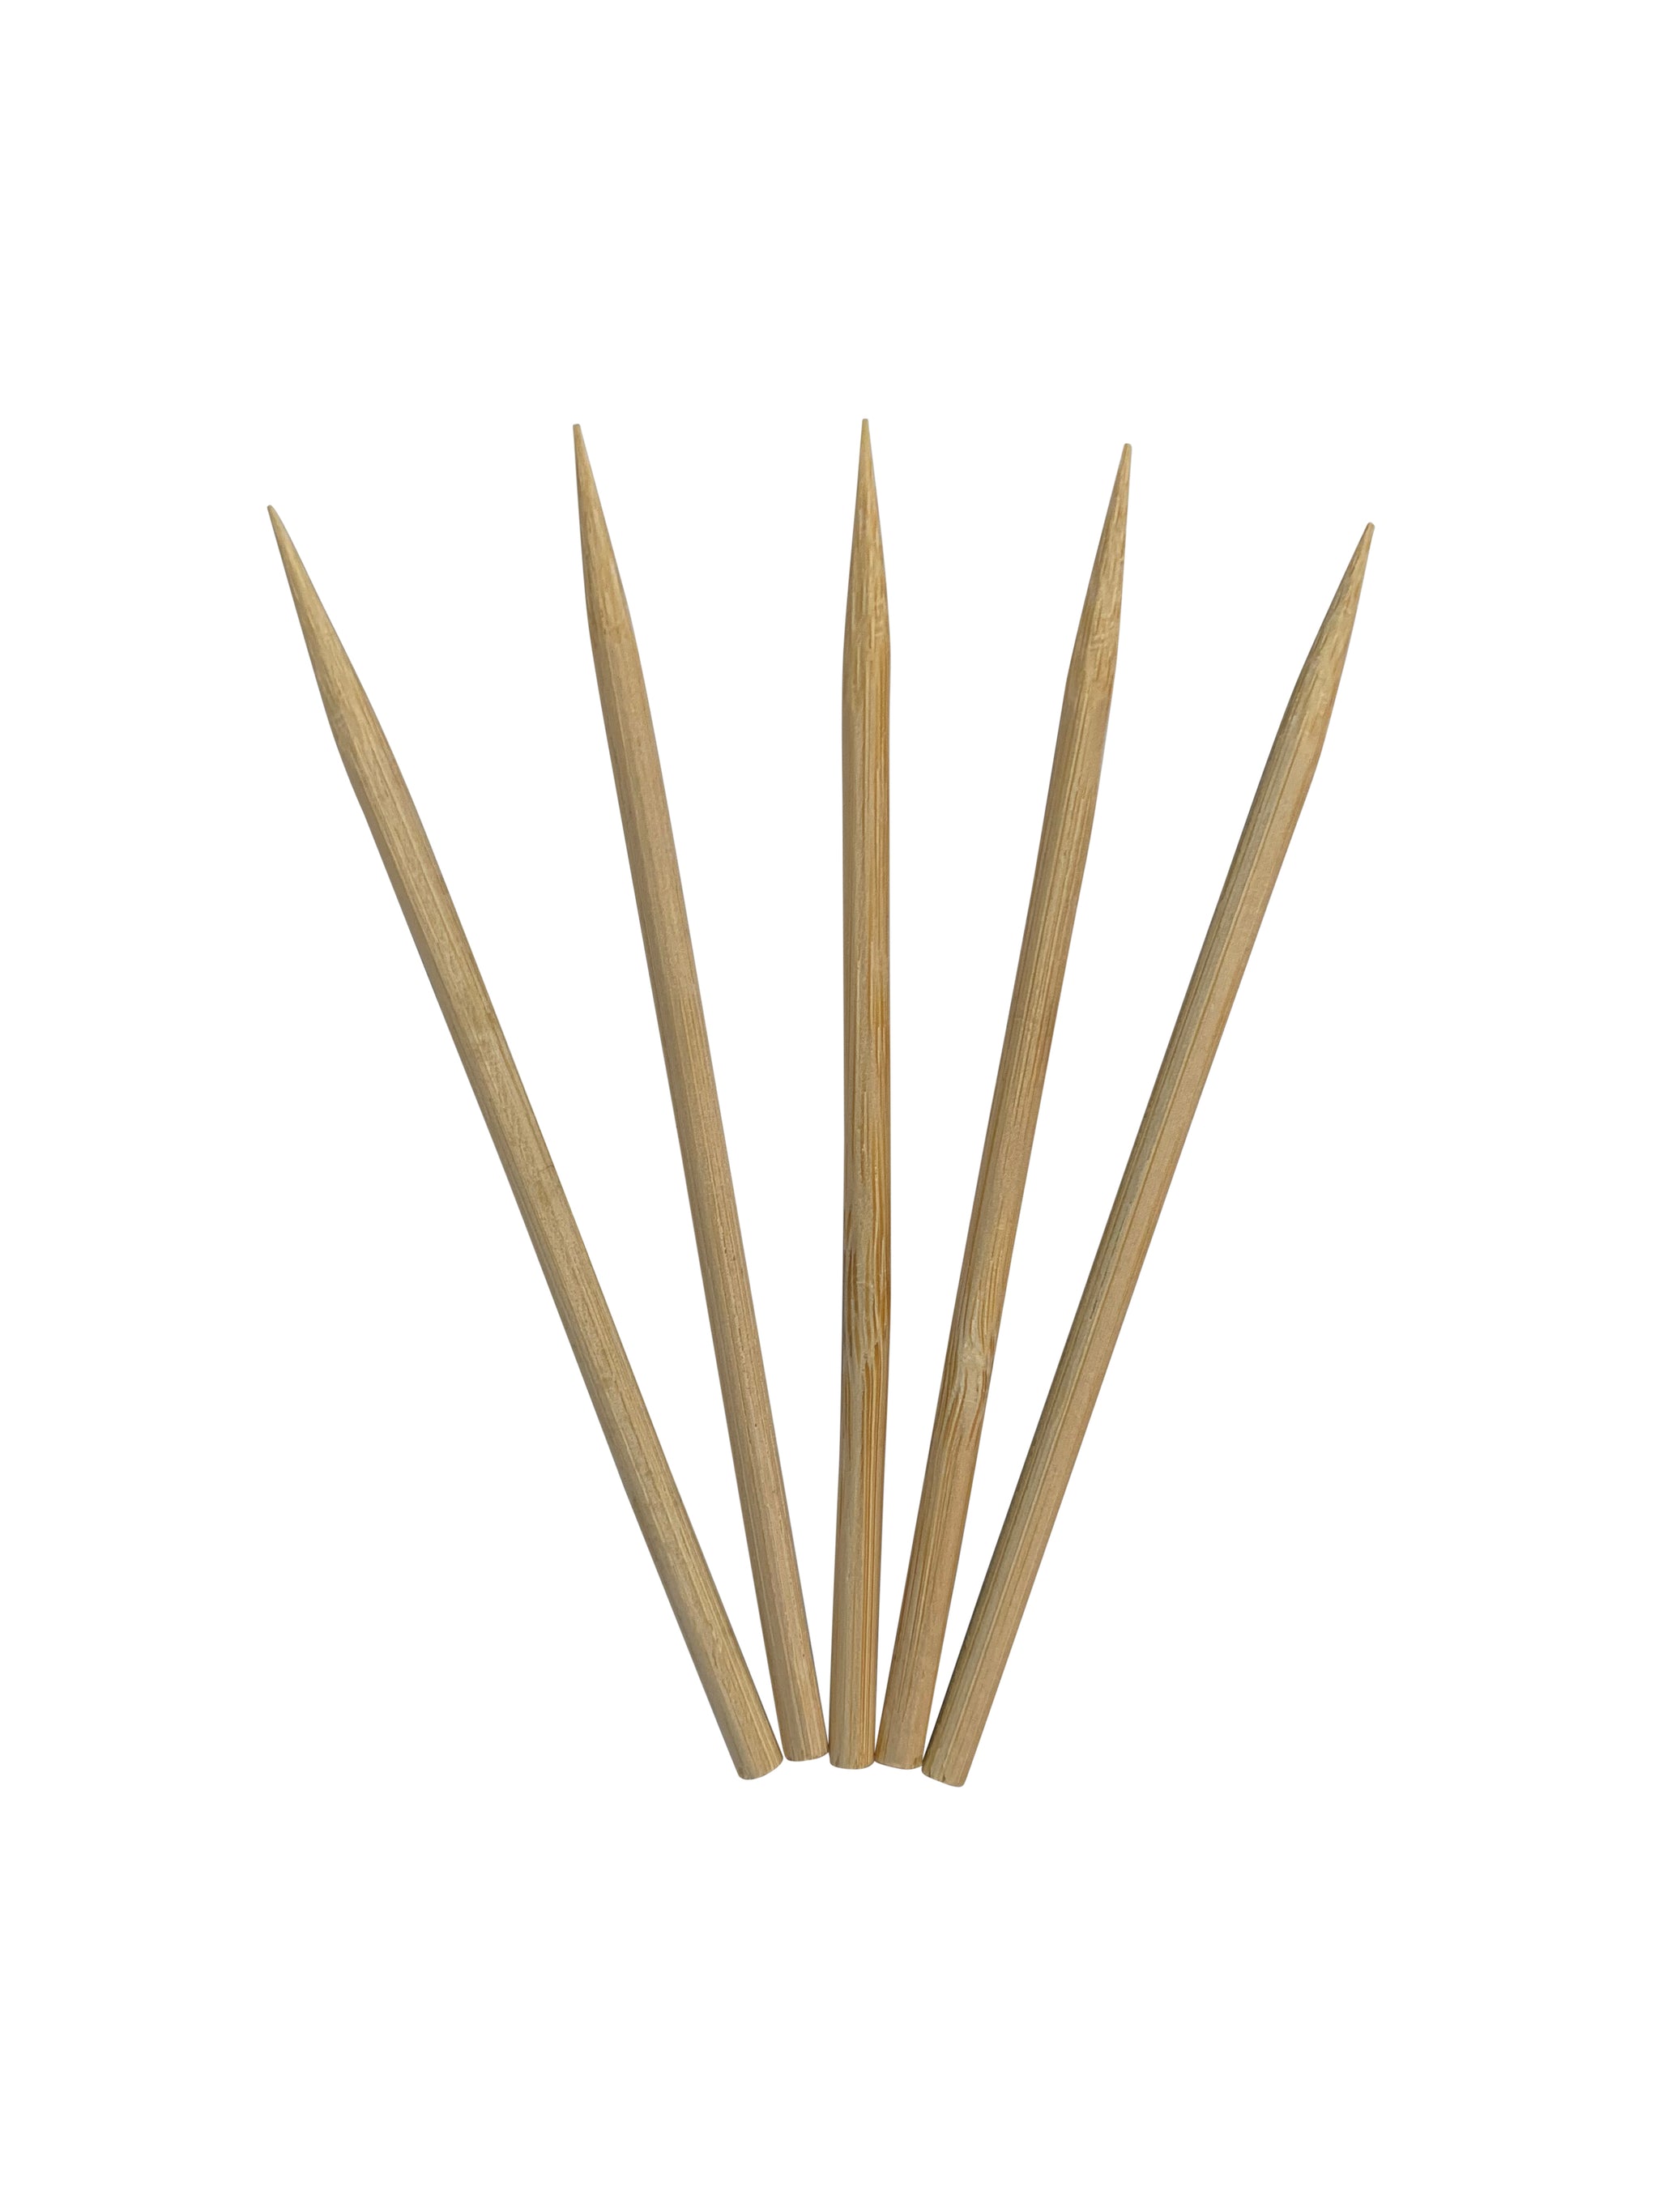 KingSeal Bamboo Grilling Skewers - 12 Inch Length, Bulk Pack - www